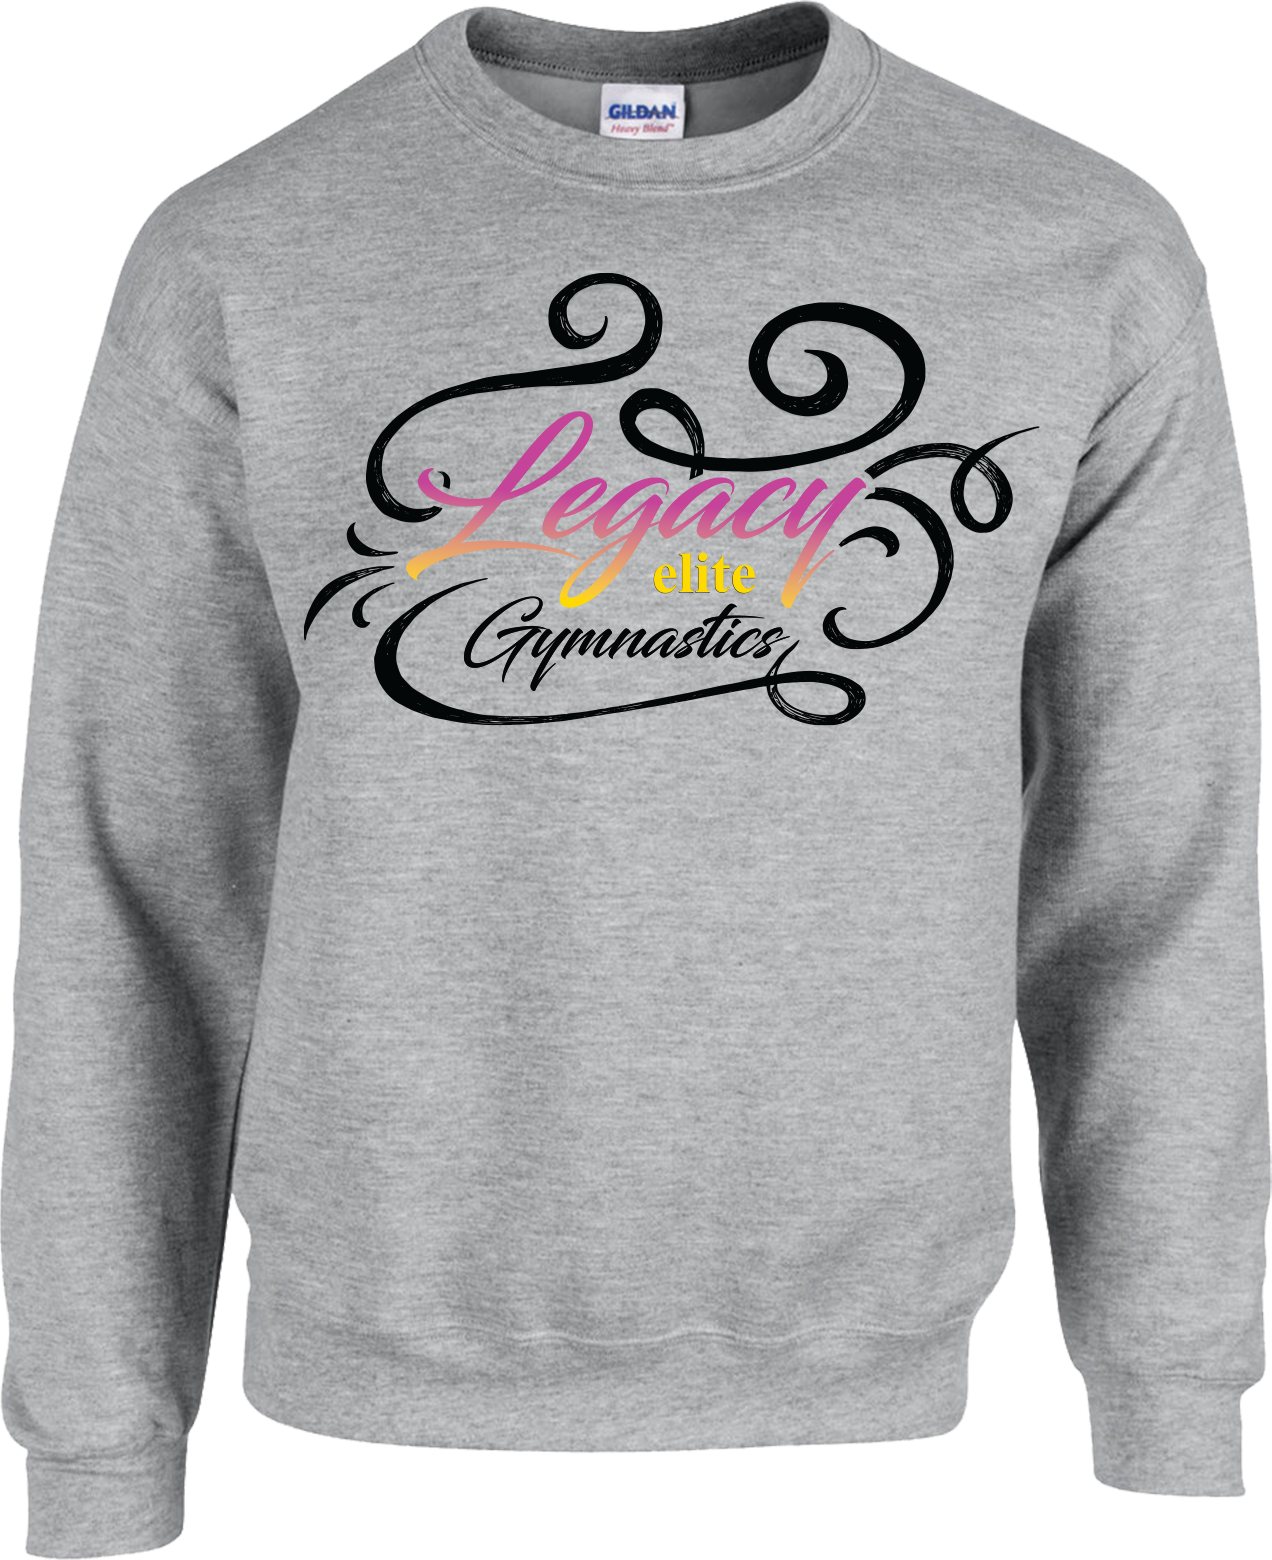 Crew Sweatershirt - Legacy Elite Gymnastics